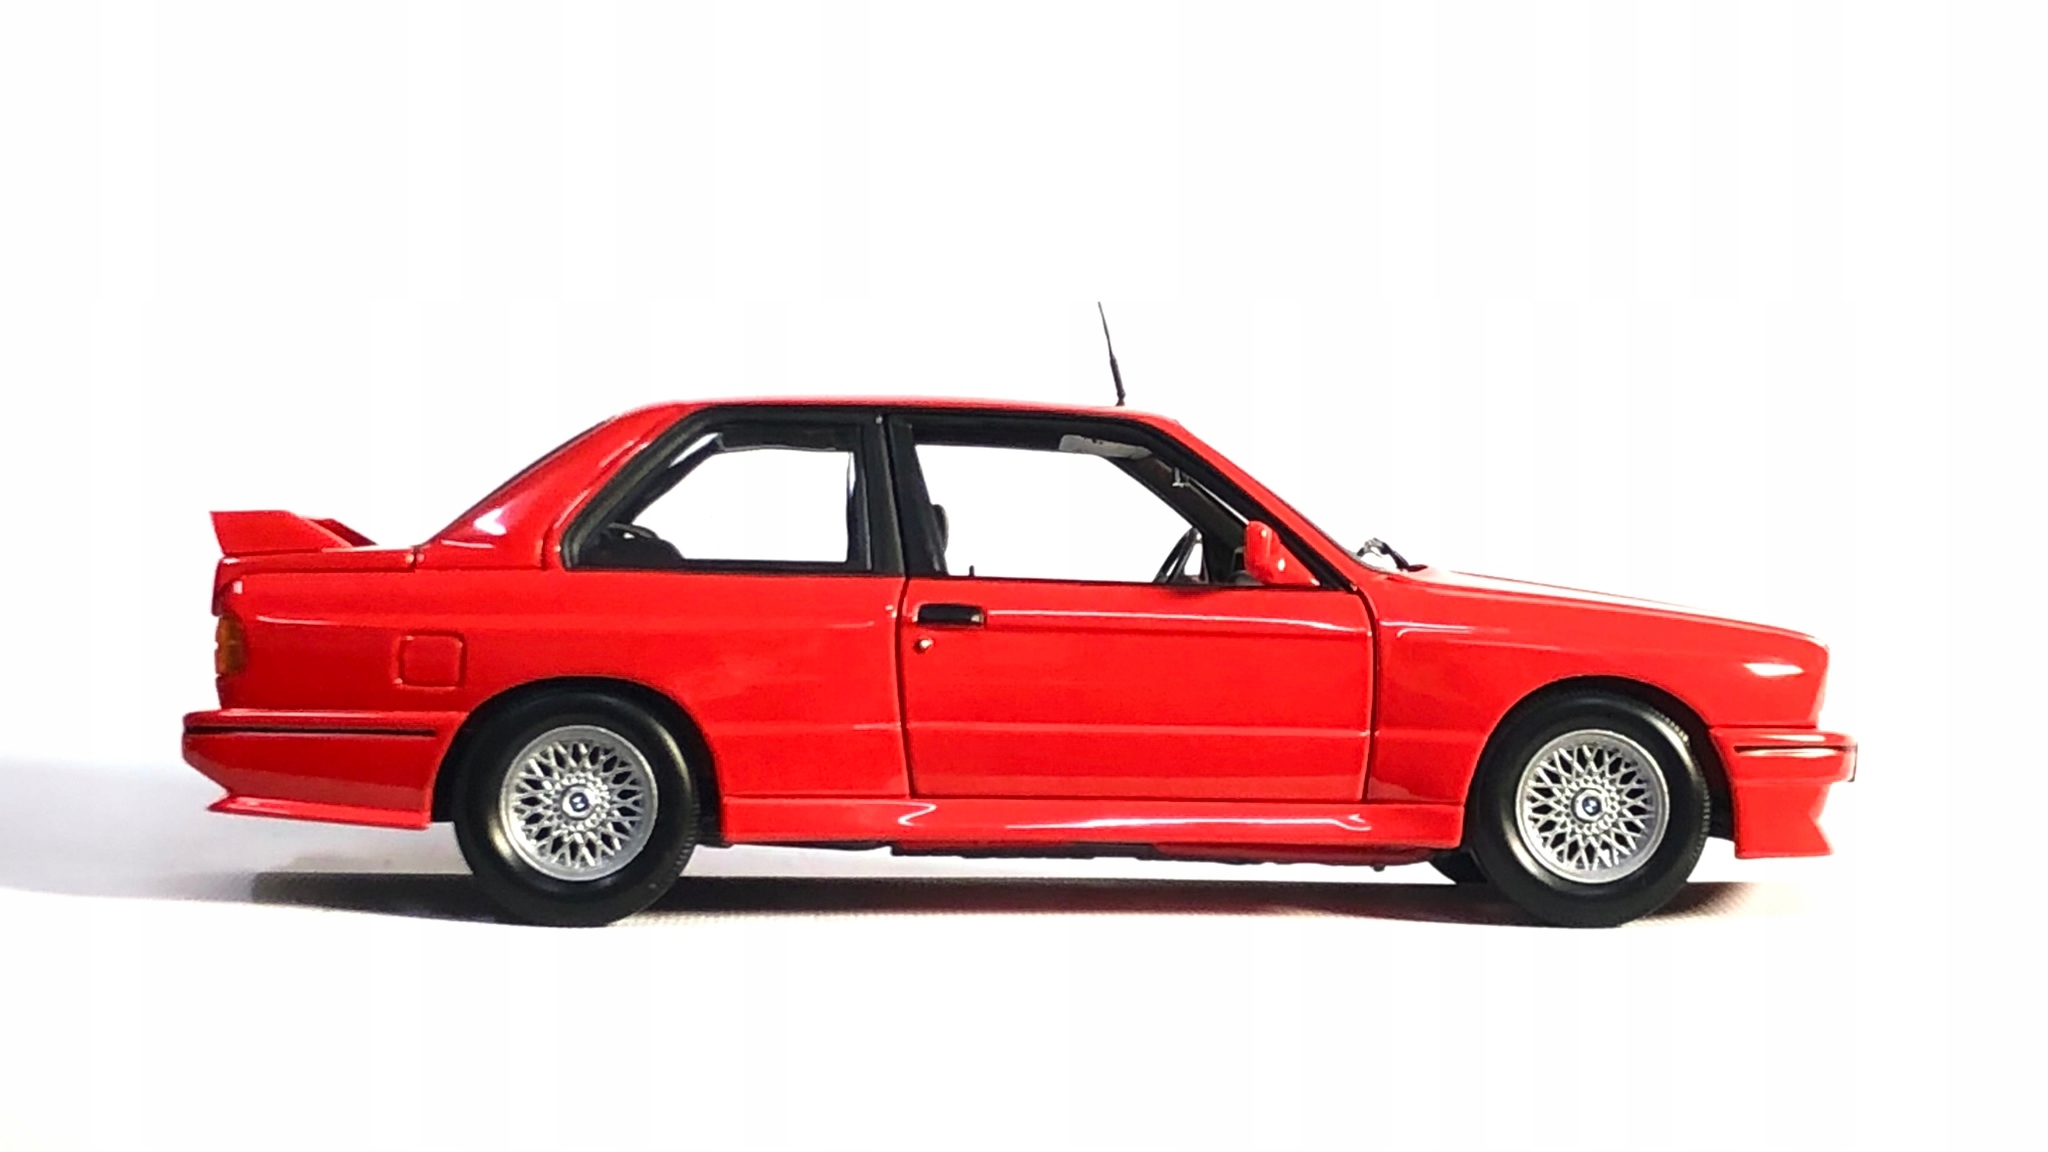 Miniatura 1986 BMW M3 E30 Misanorot 1:18 za 3330 Kč od WARSZAWA - Allegro -  (13093783440)